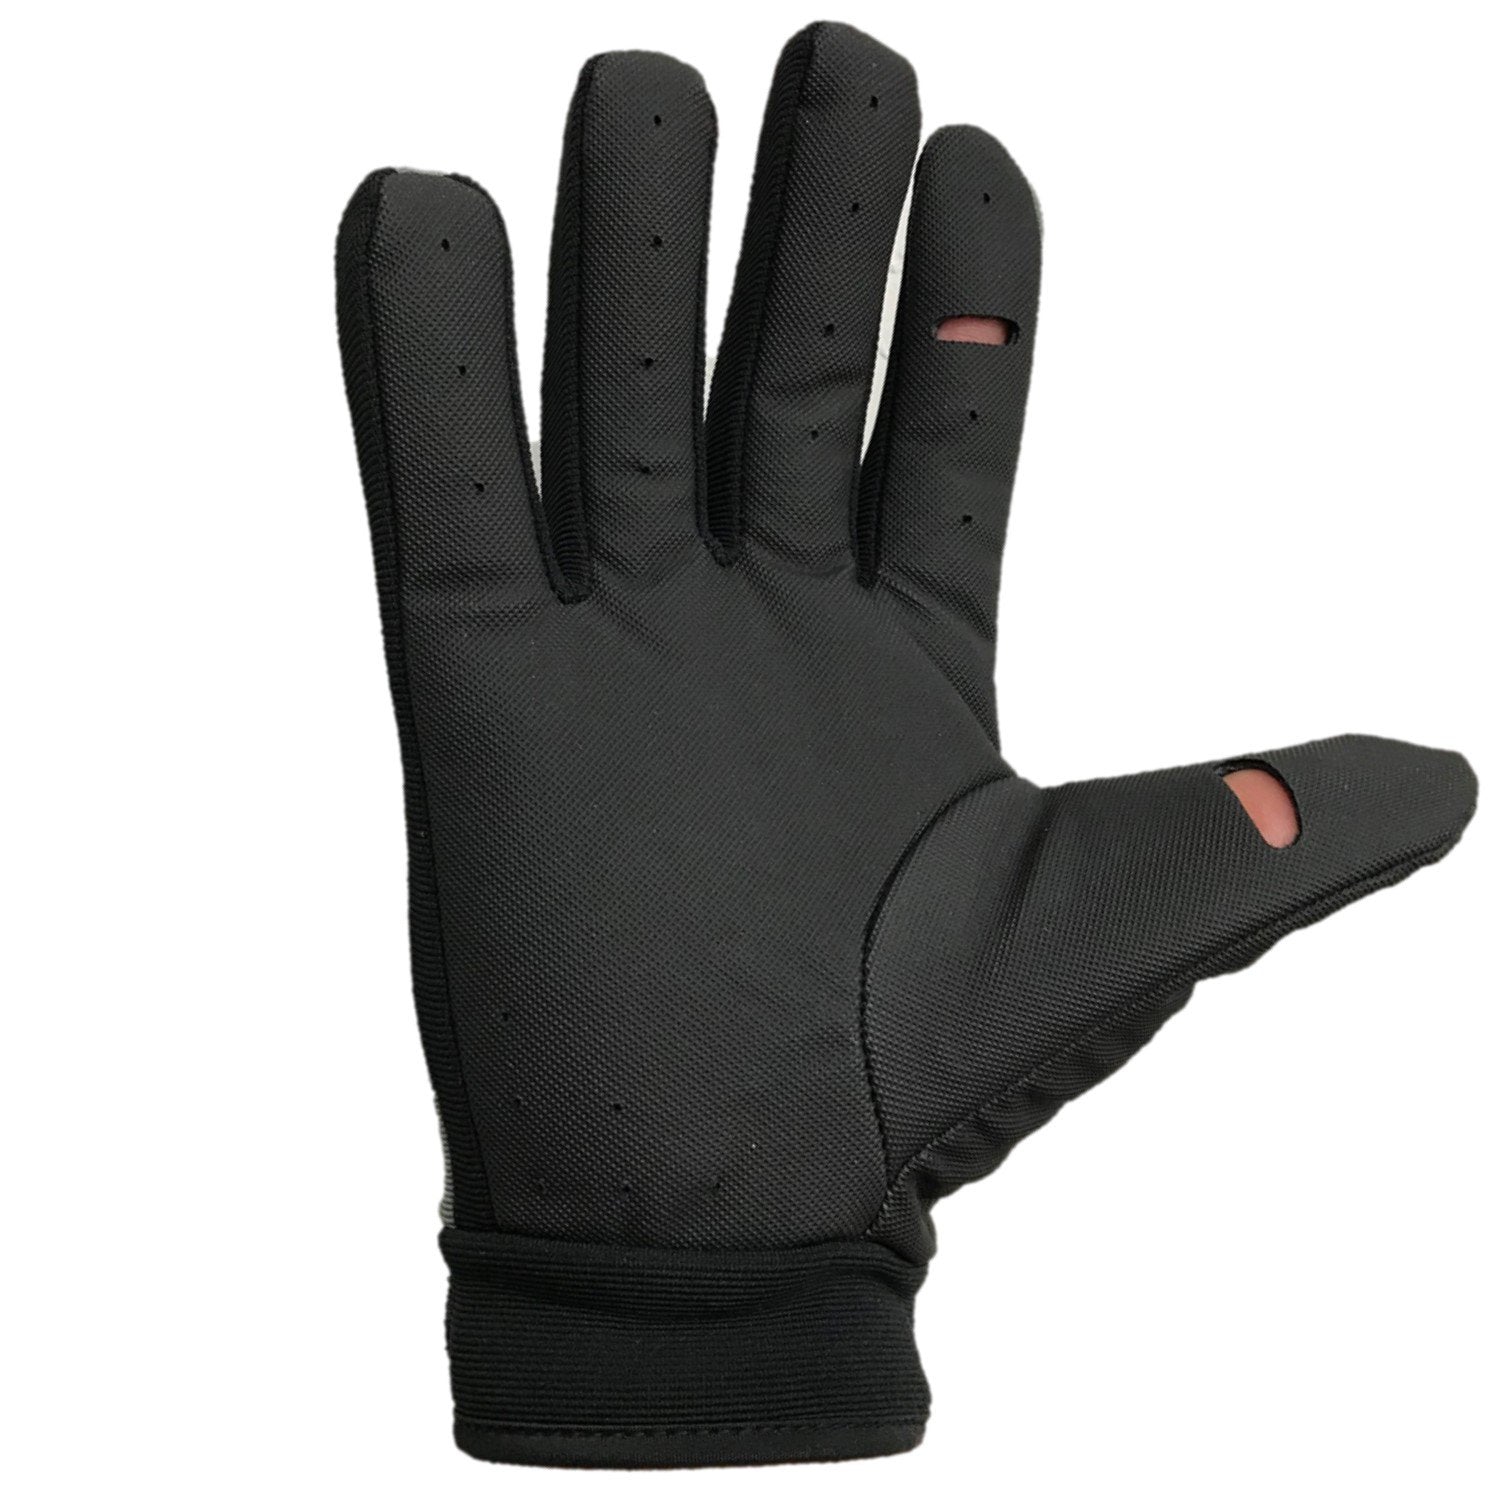 GlacierL Lt.Neoprene Glove Slt/Fng w/Imt Leather Palm, Lrg Black